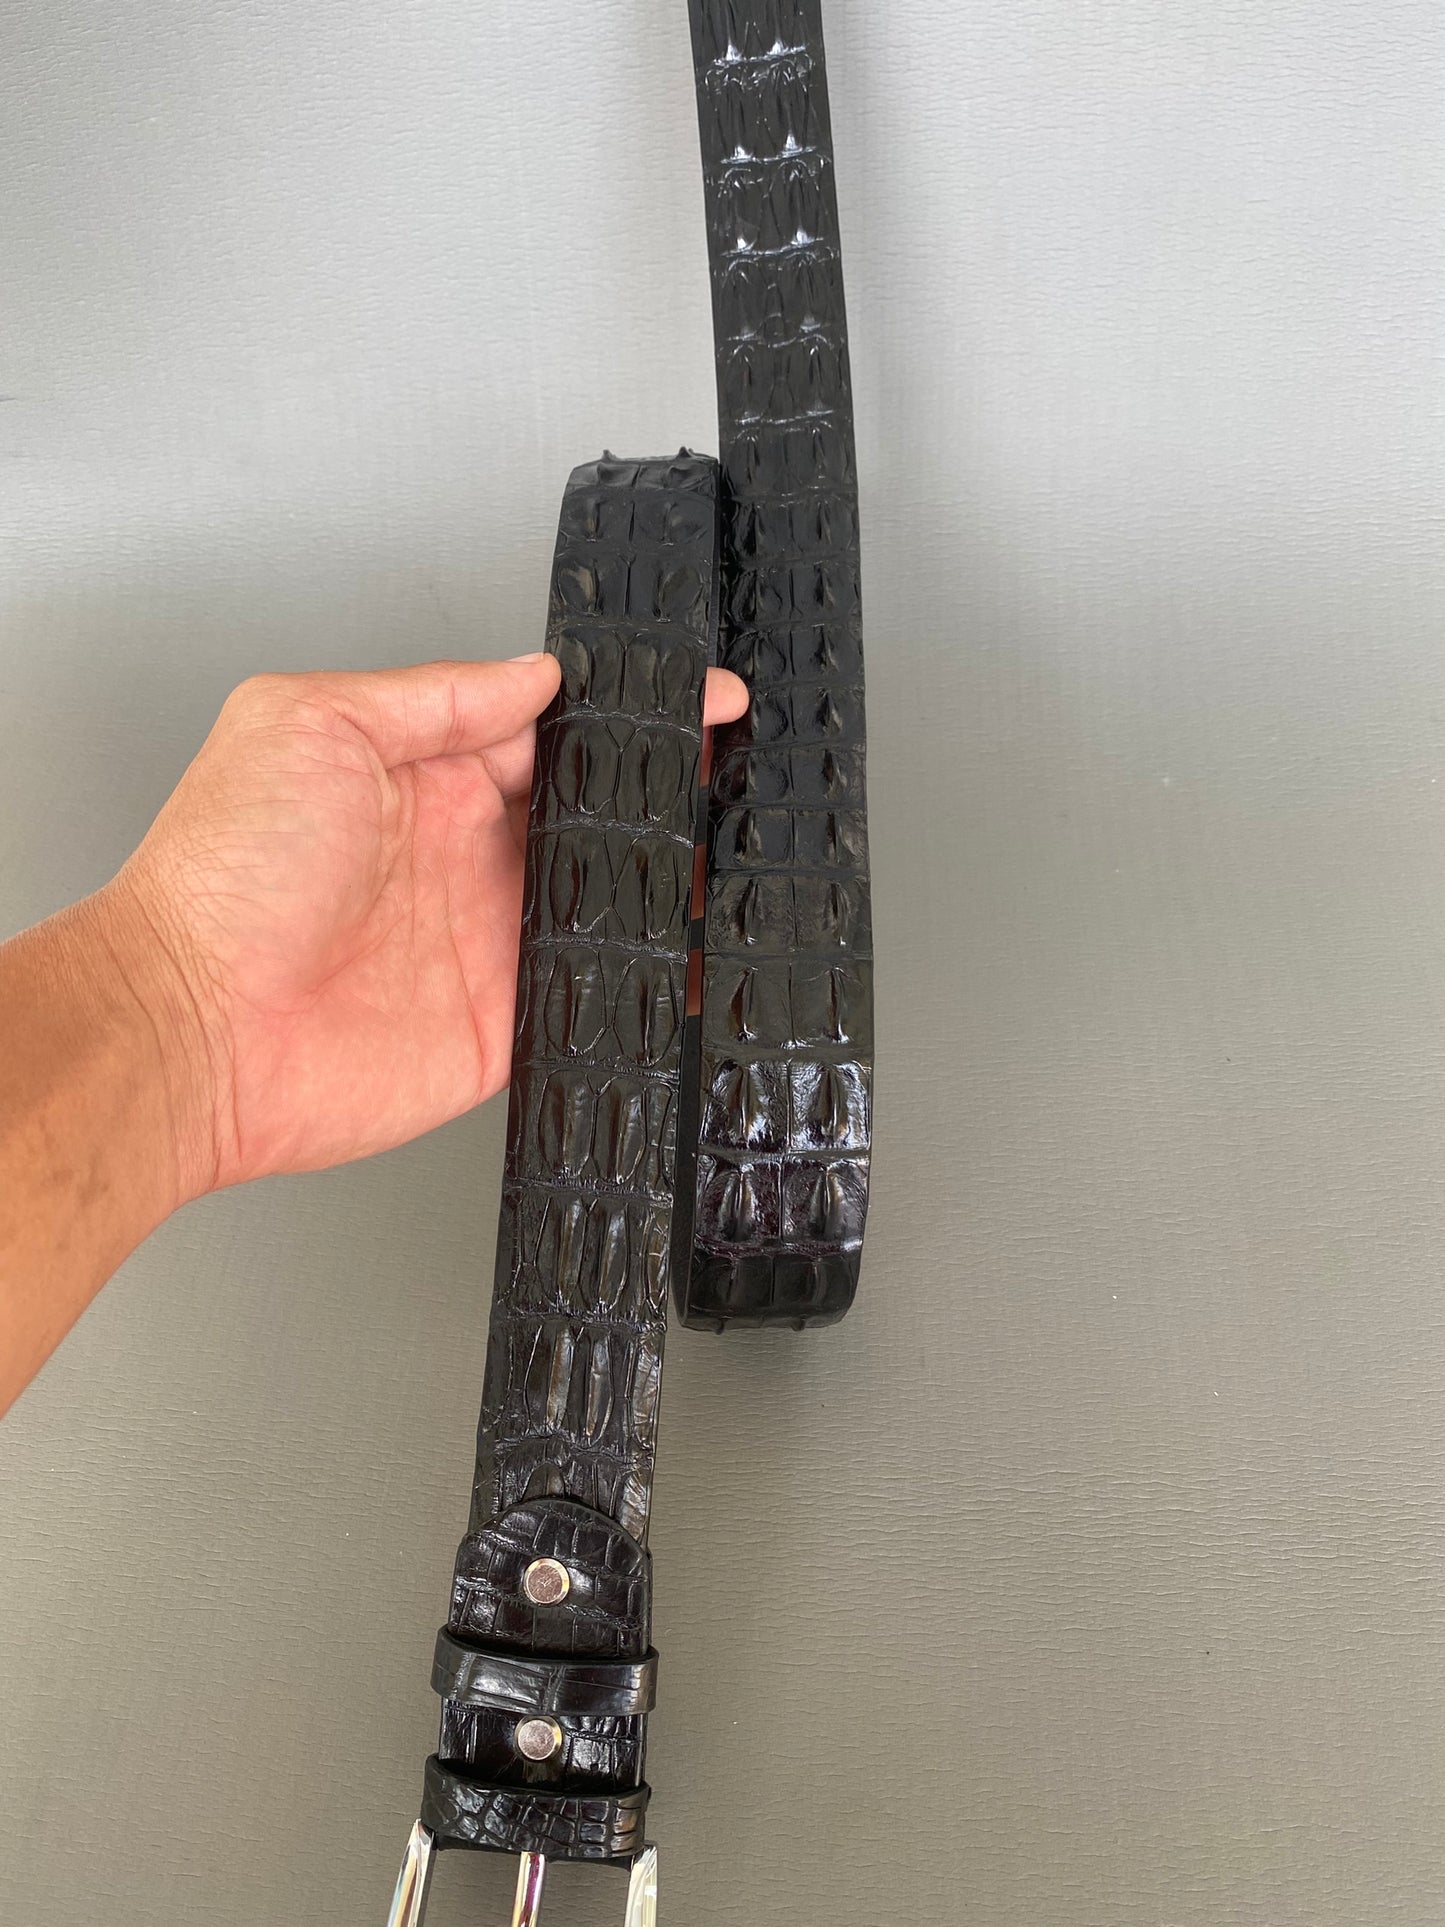 Black Genuine alligator hornback leather belt for men